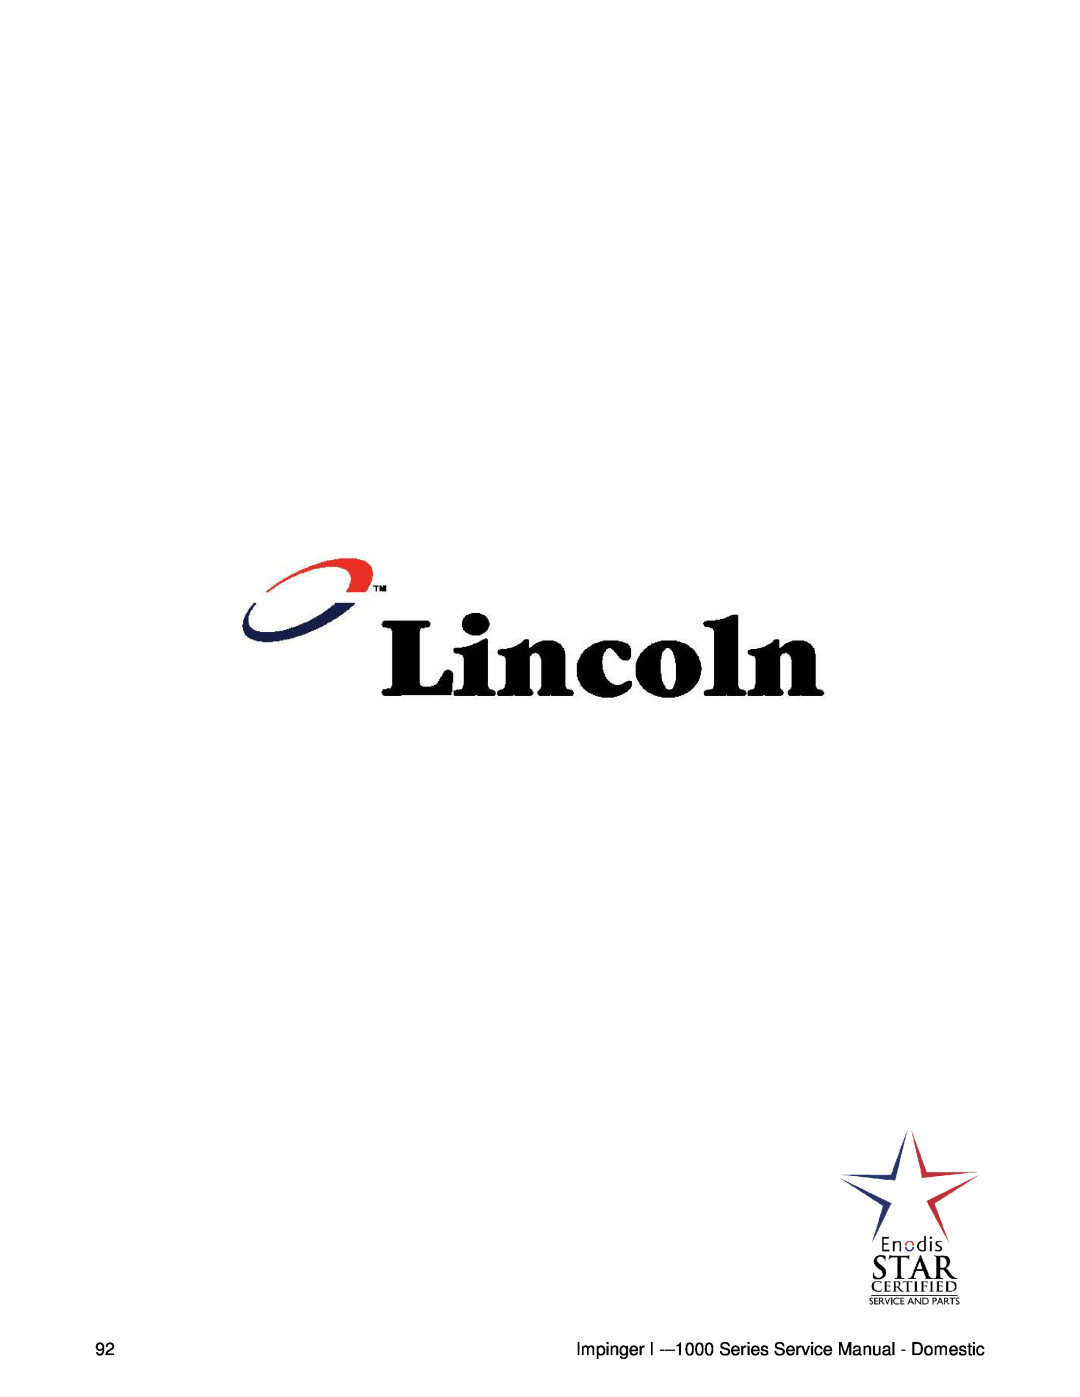 Lincoln 1400, 1200 service manual Impinger I -–1000Series Service Manual - Domestic 